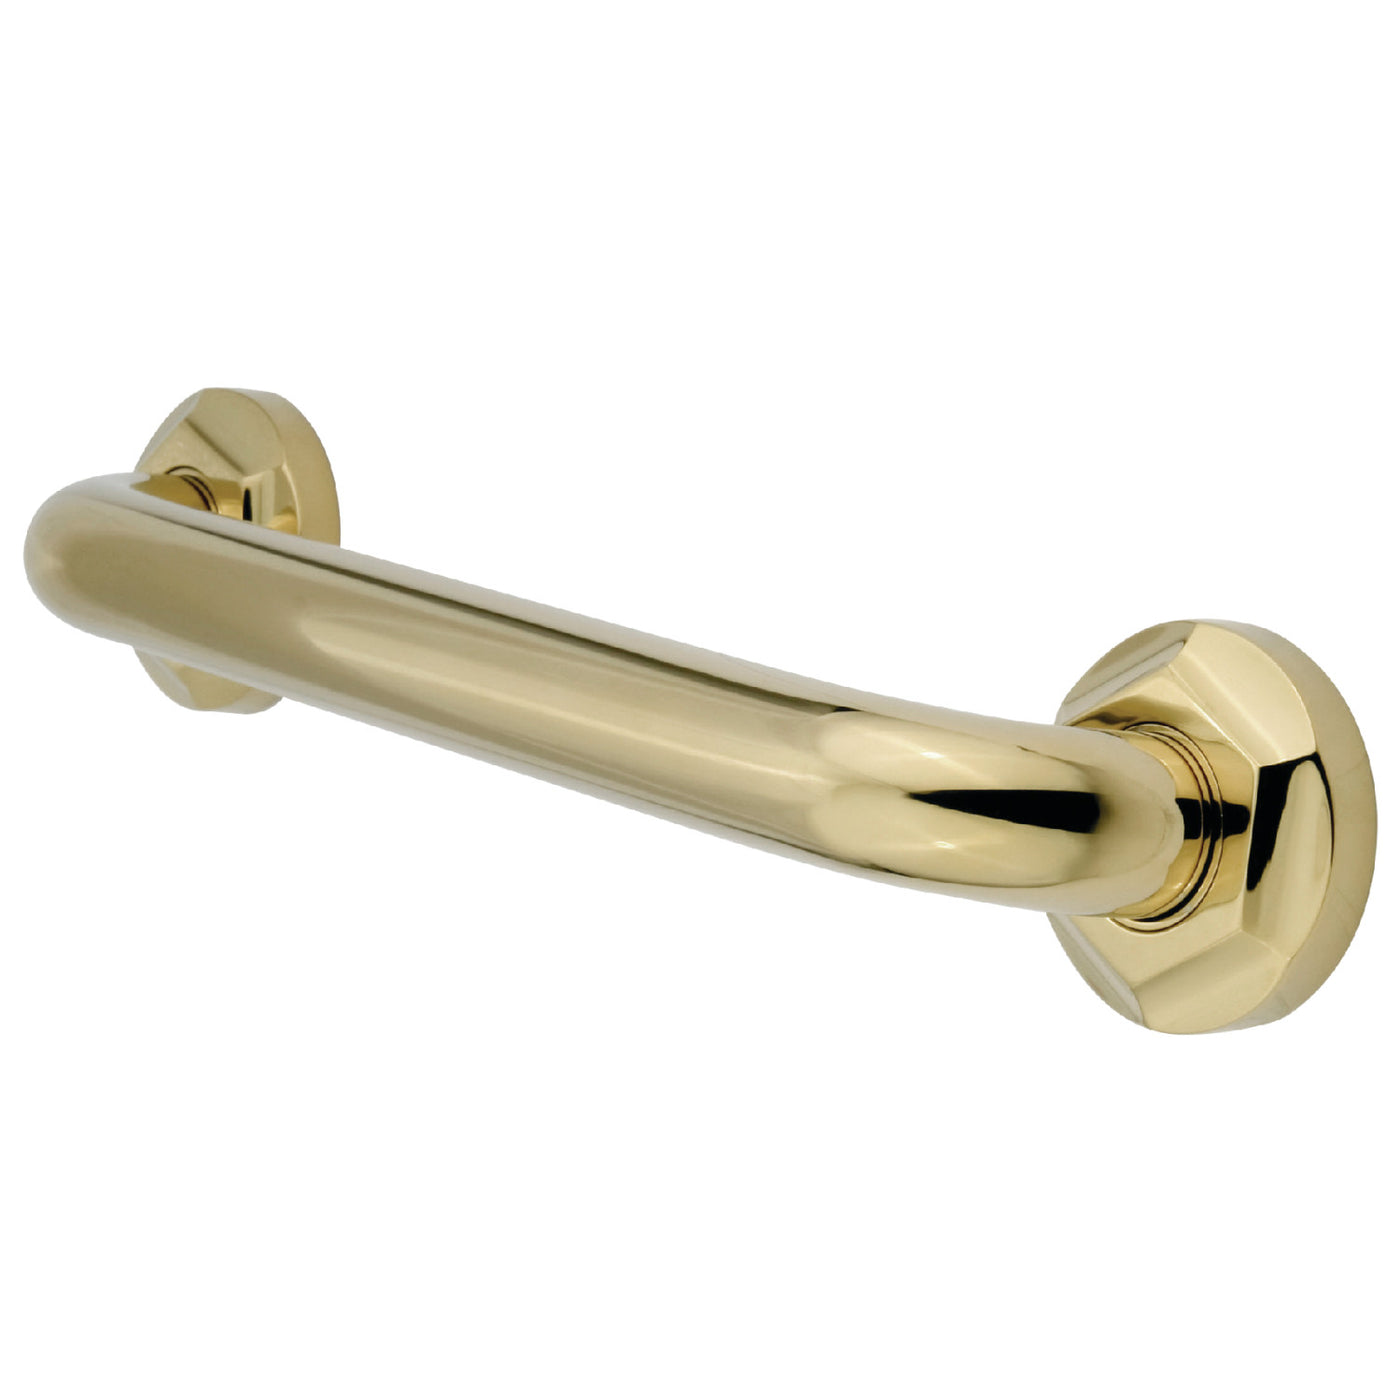 Elements of Design EDR714362 36-Inch x 1-1/4-Inch O.D Grab Bar, Polished Brass